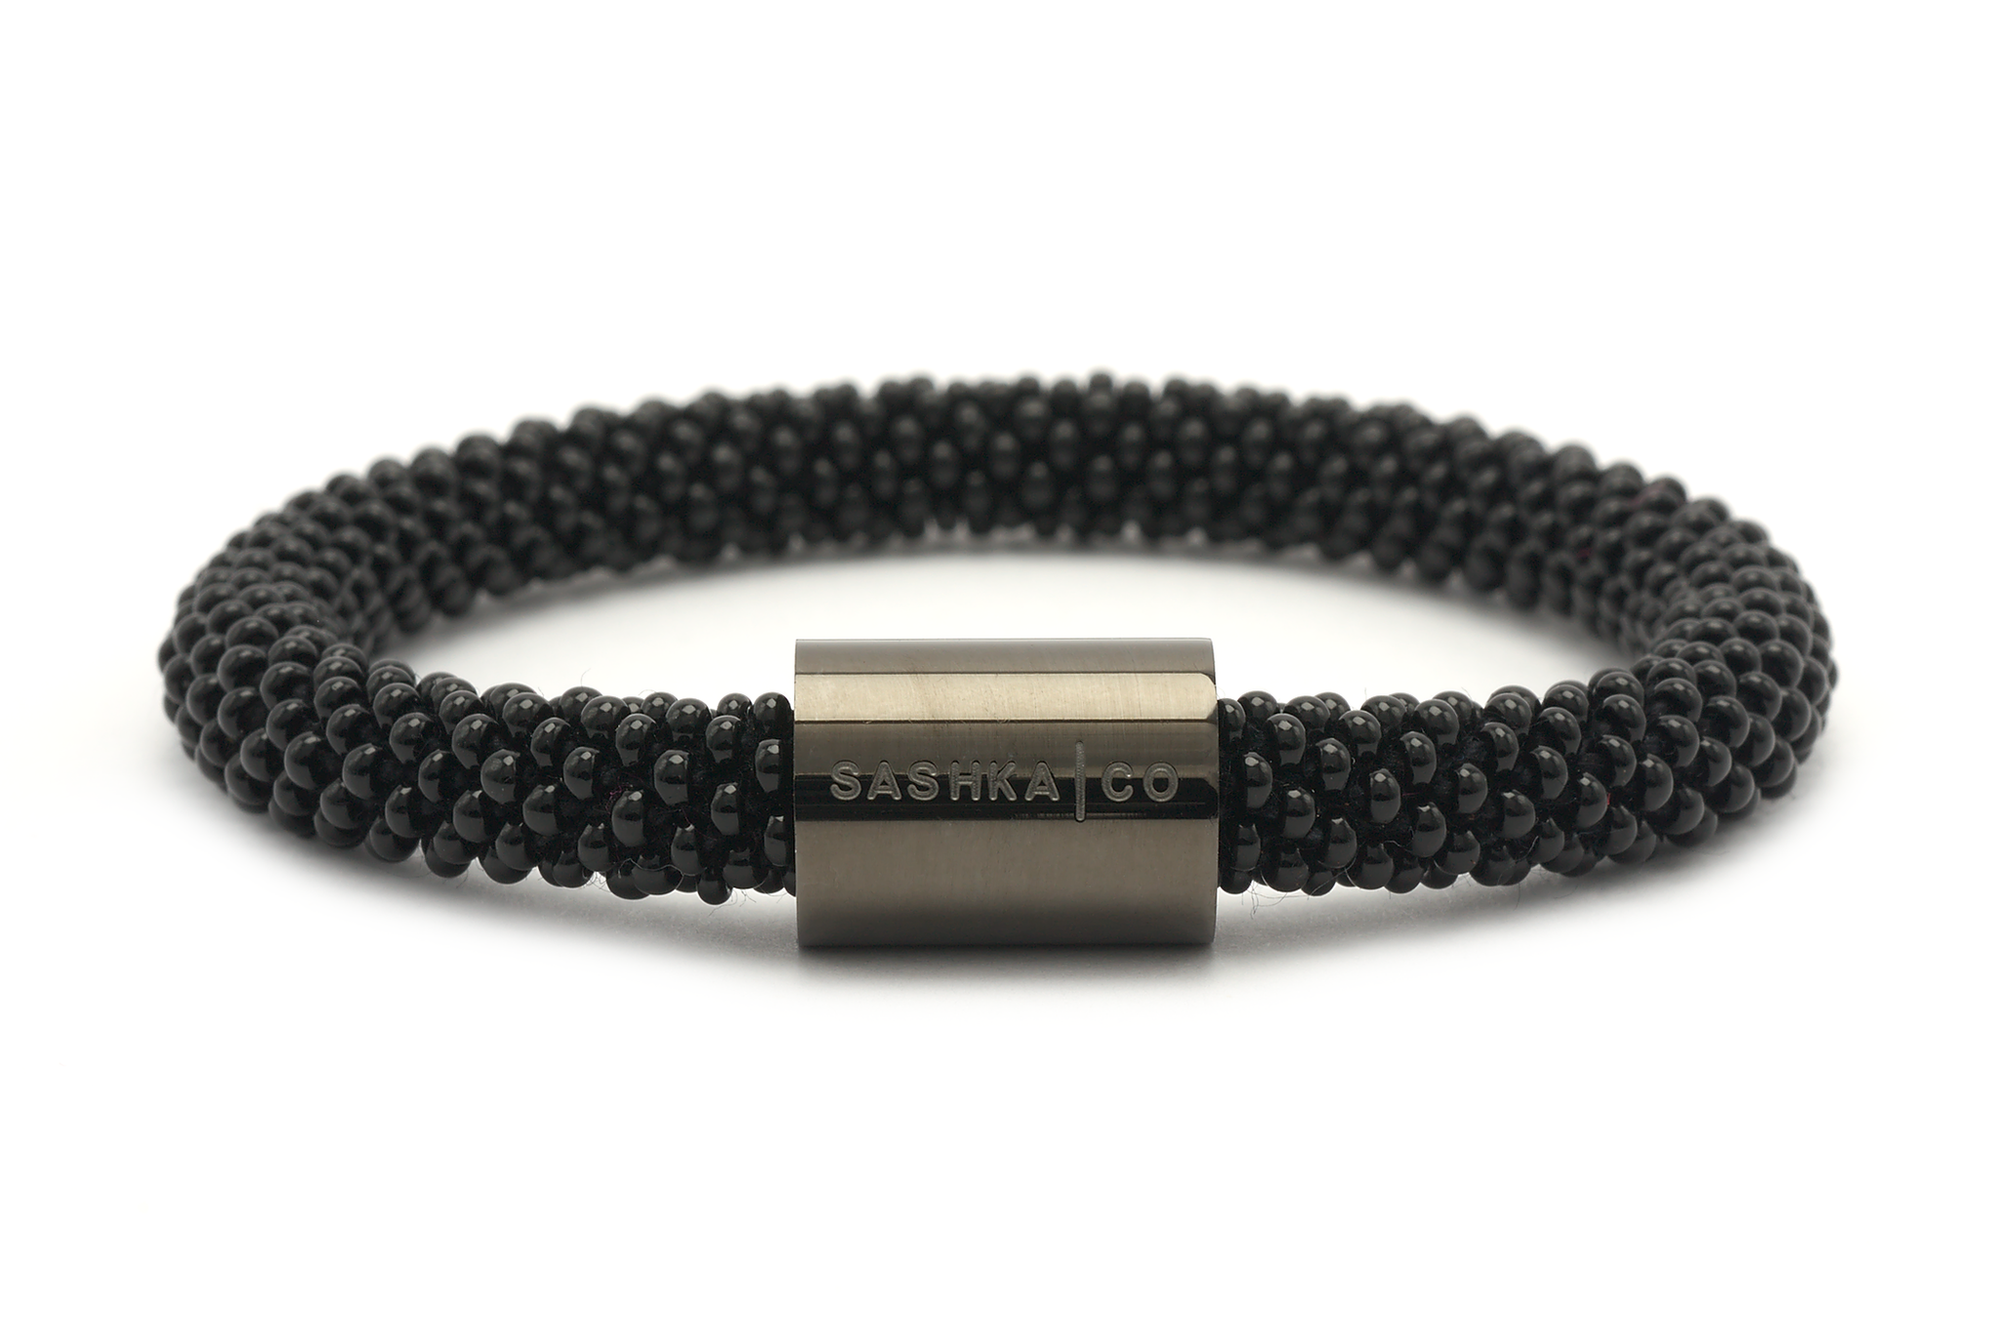 Sashka Co. Charm Bracelet Black w/ Polished Black Charm Sashkaco Charm Bracelet - Extended 8"